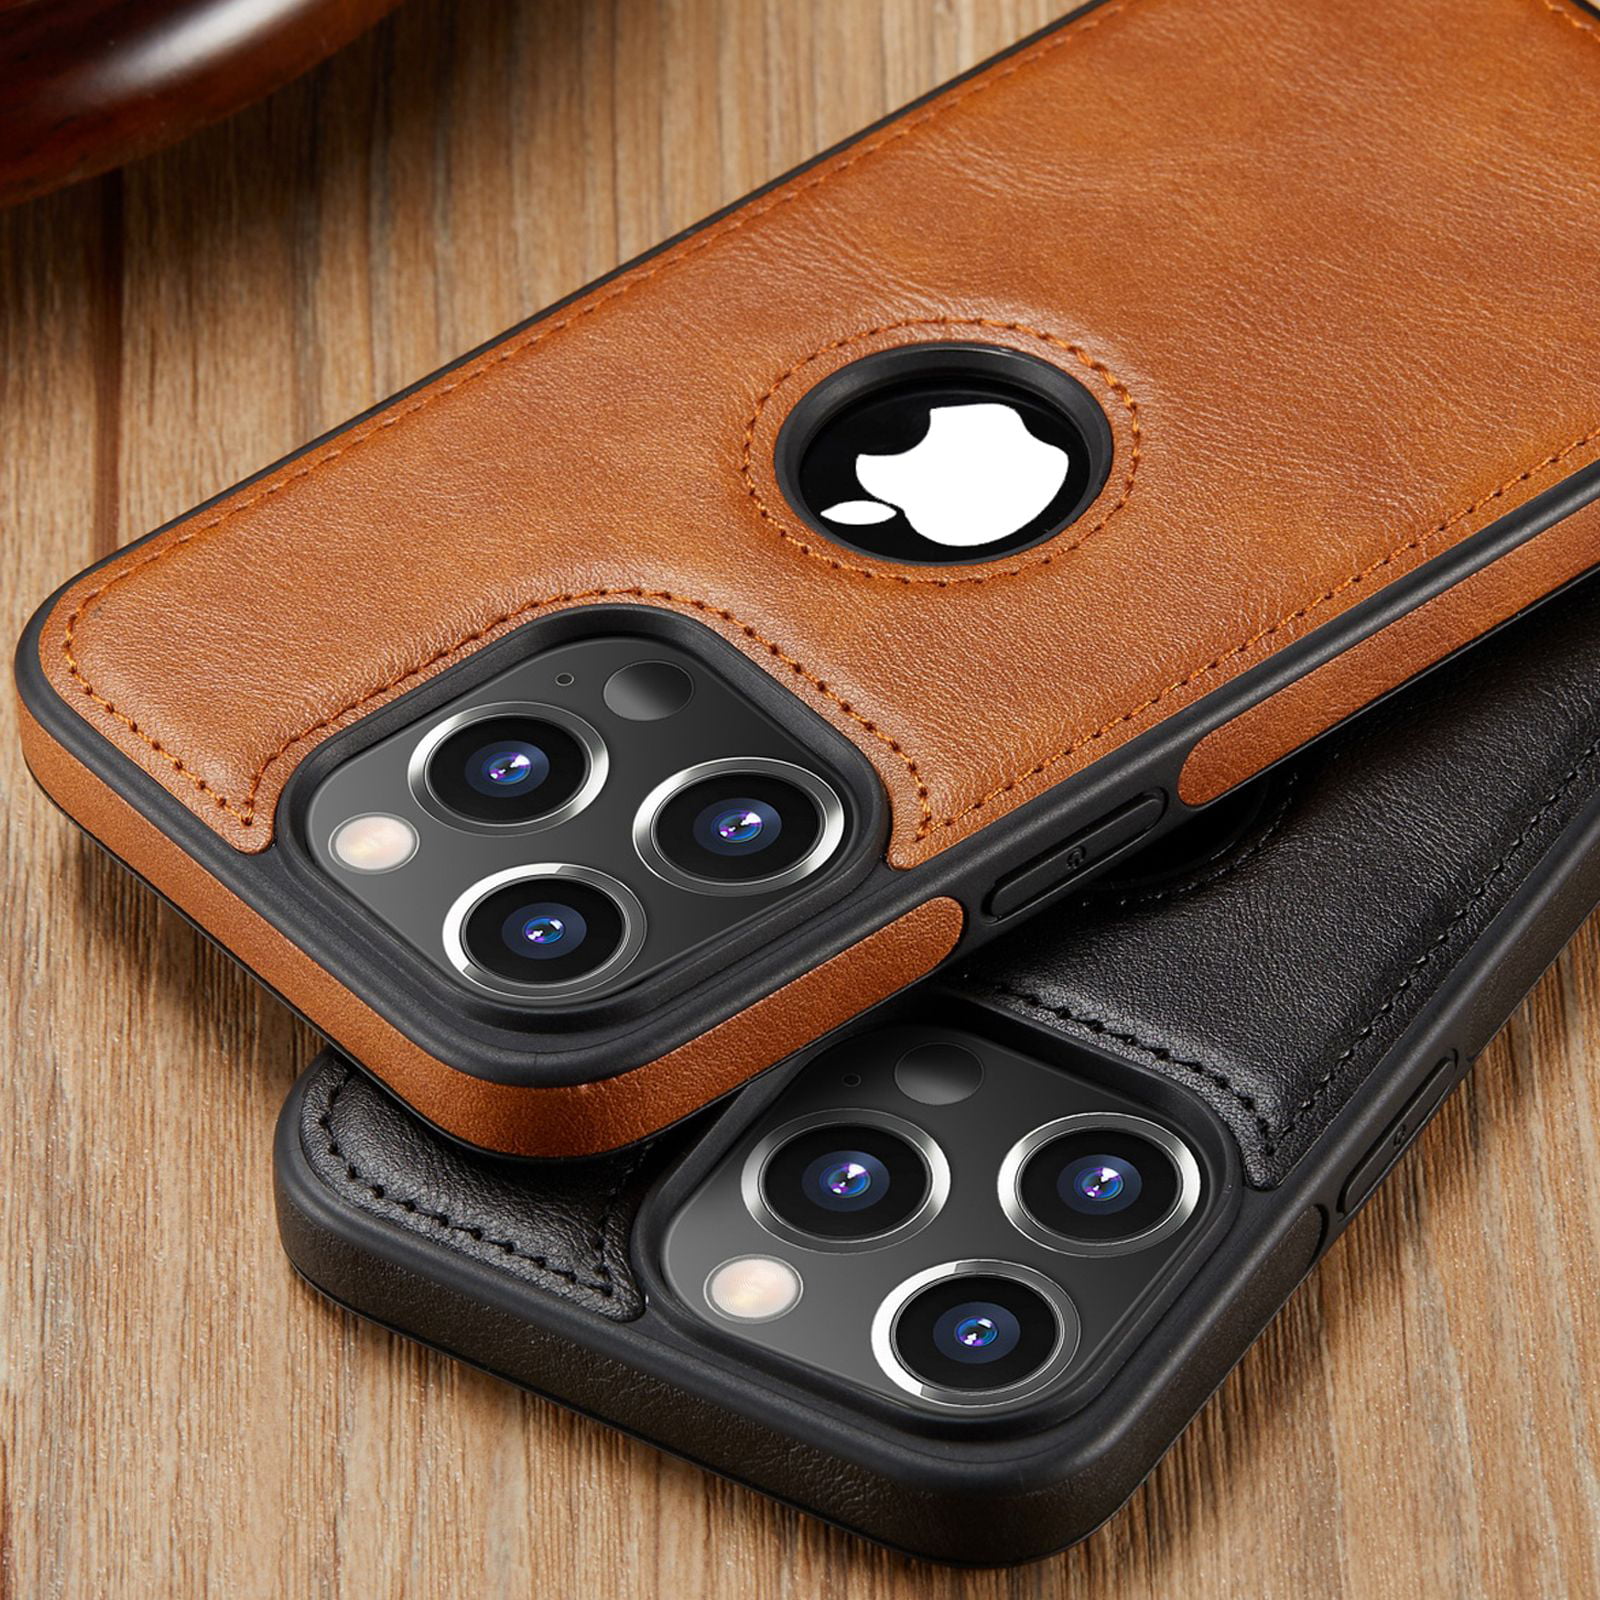 Python Leather iPhone 13 Pro Classic Case – Labodet